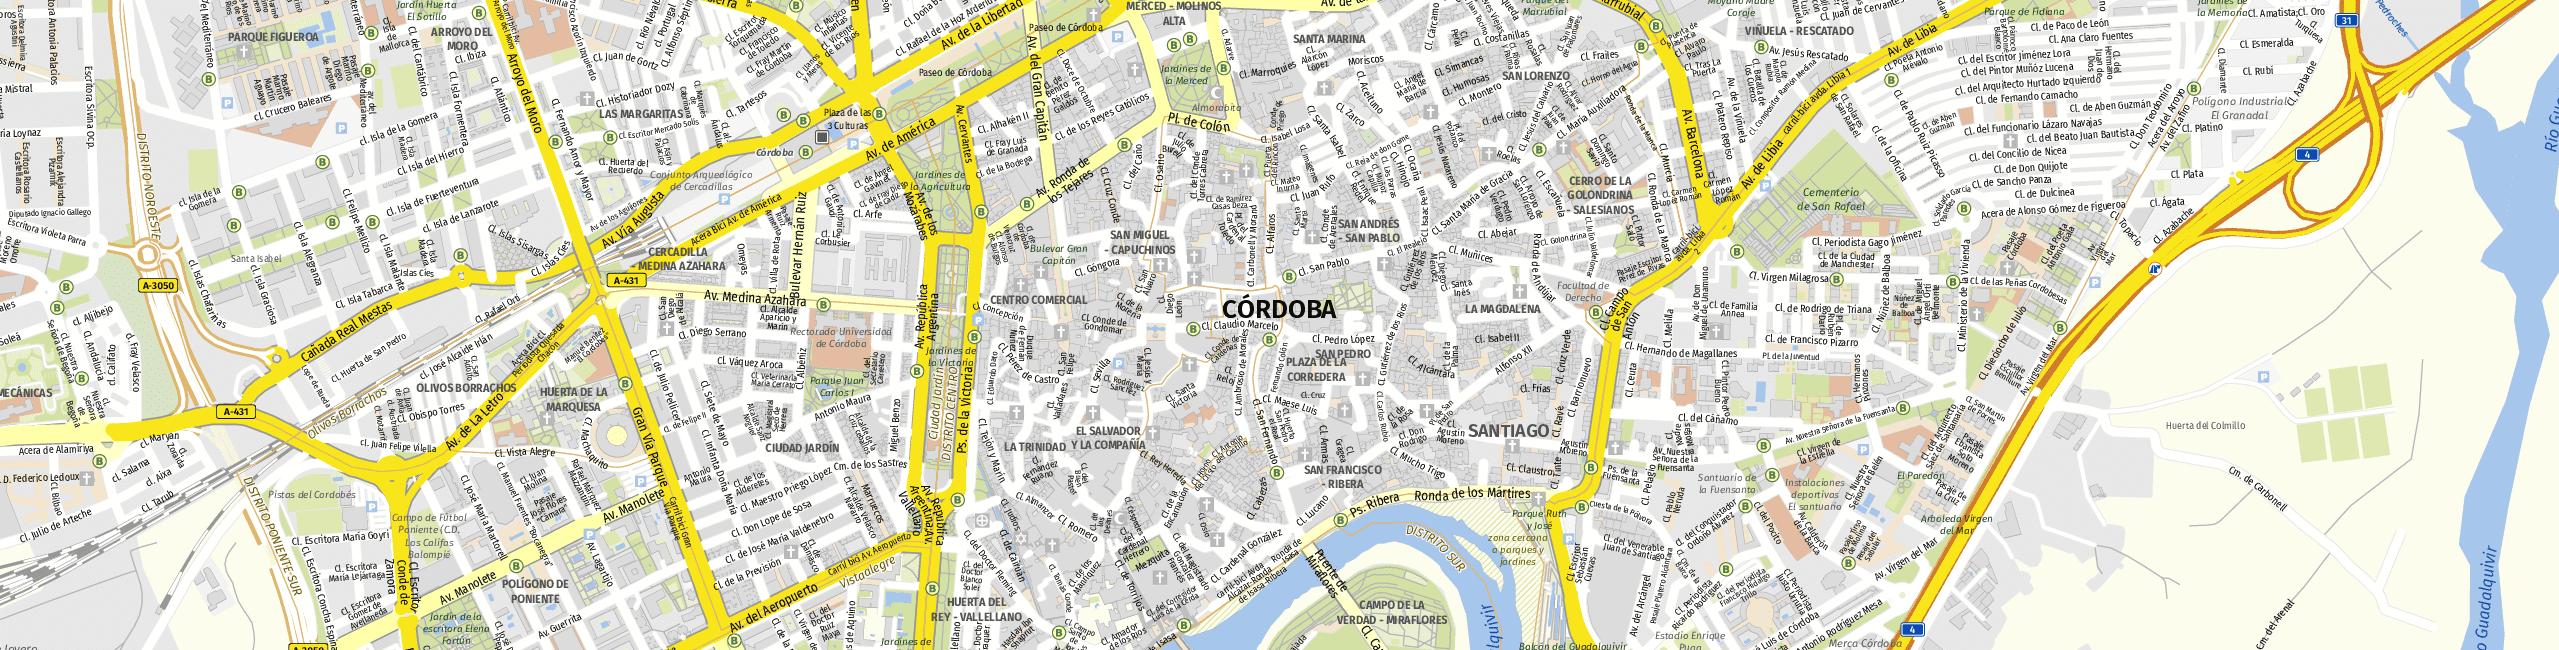 Stadtplan Córdoba zum Downloaden.